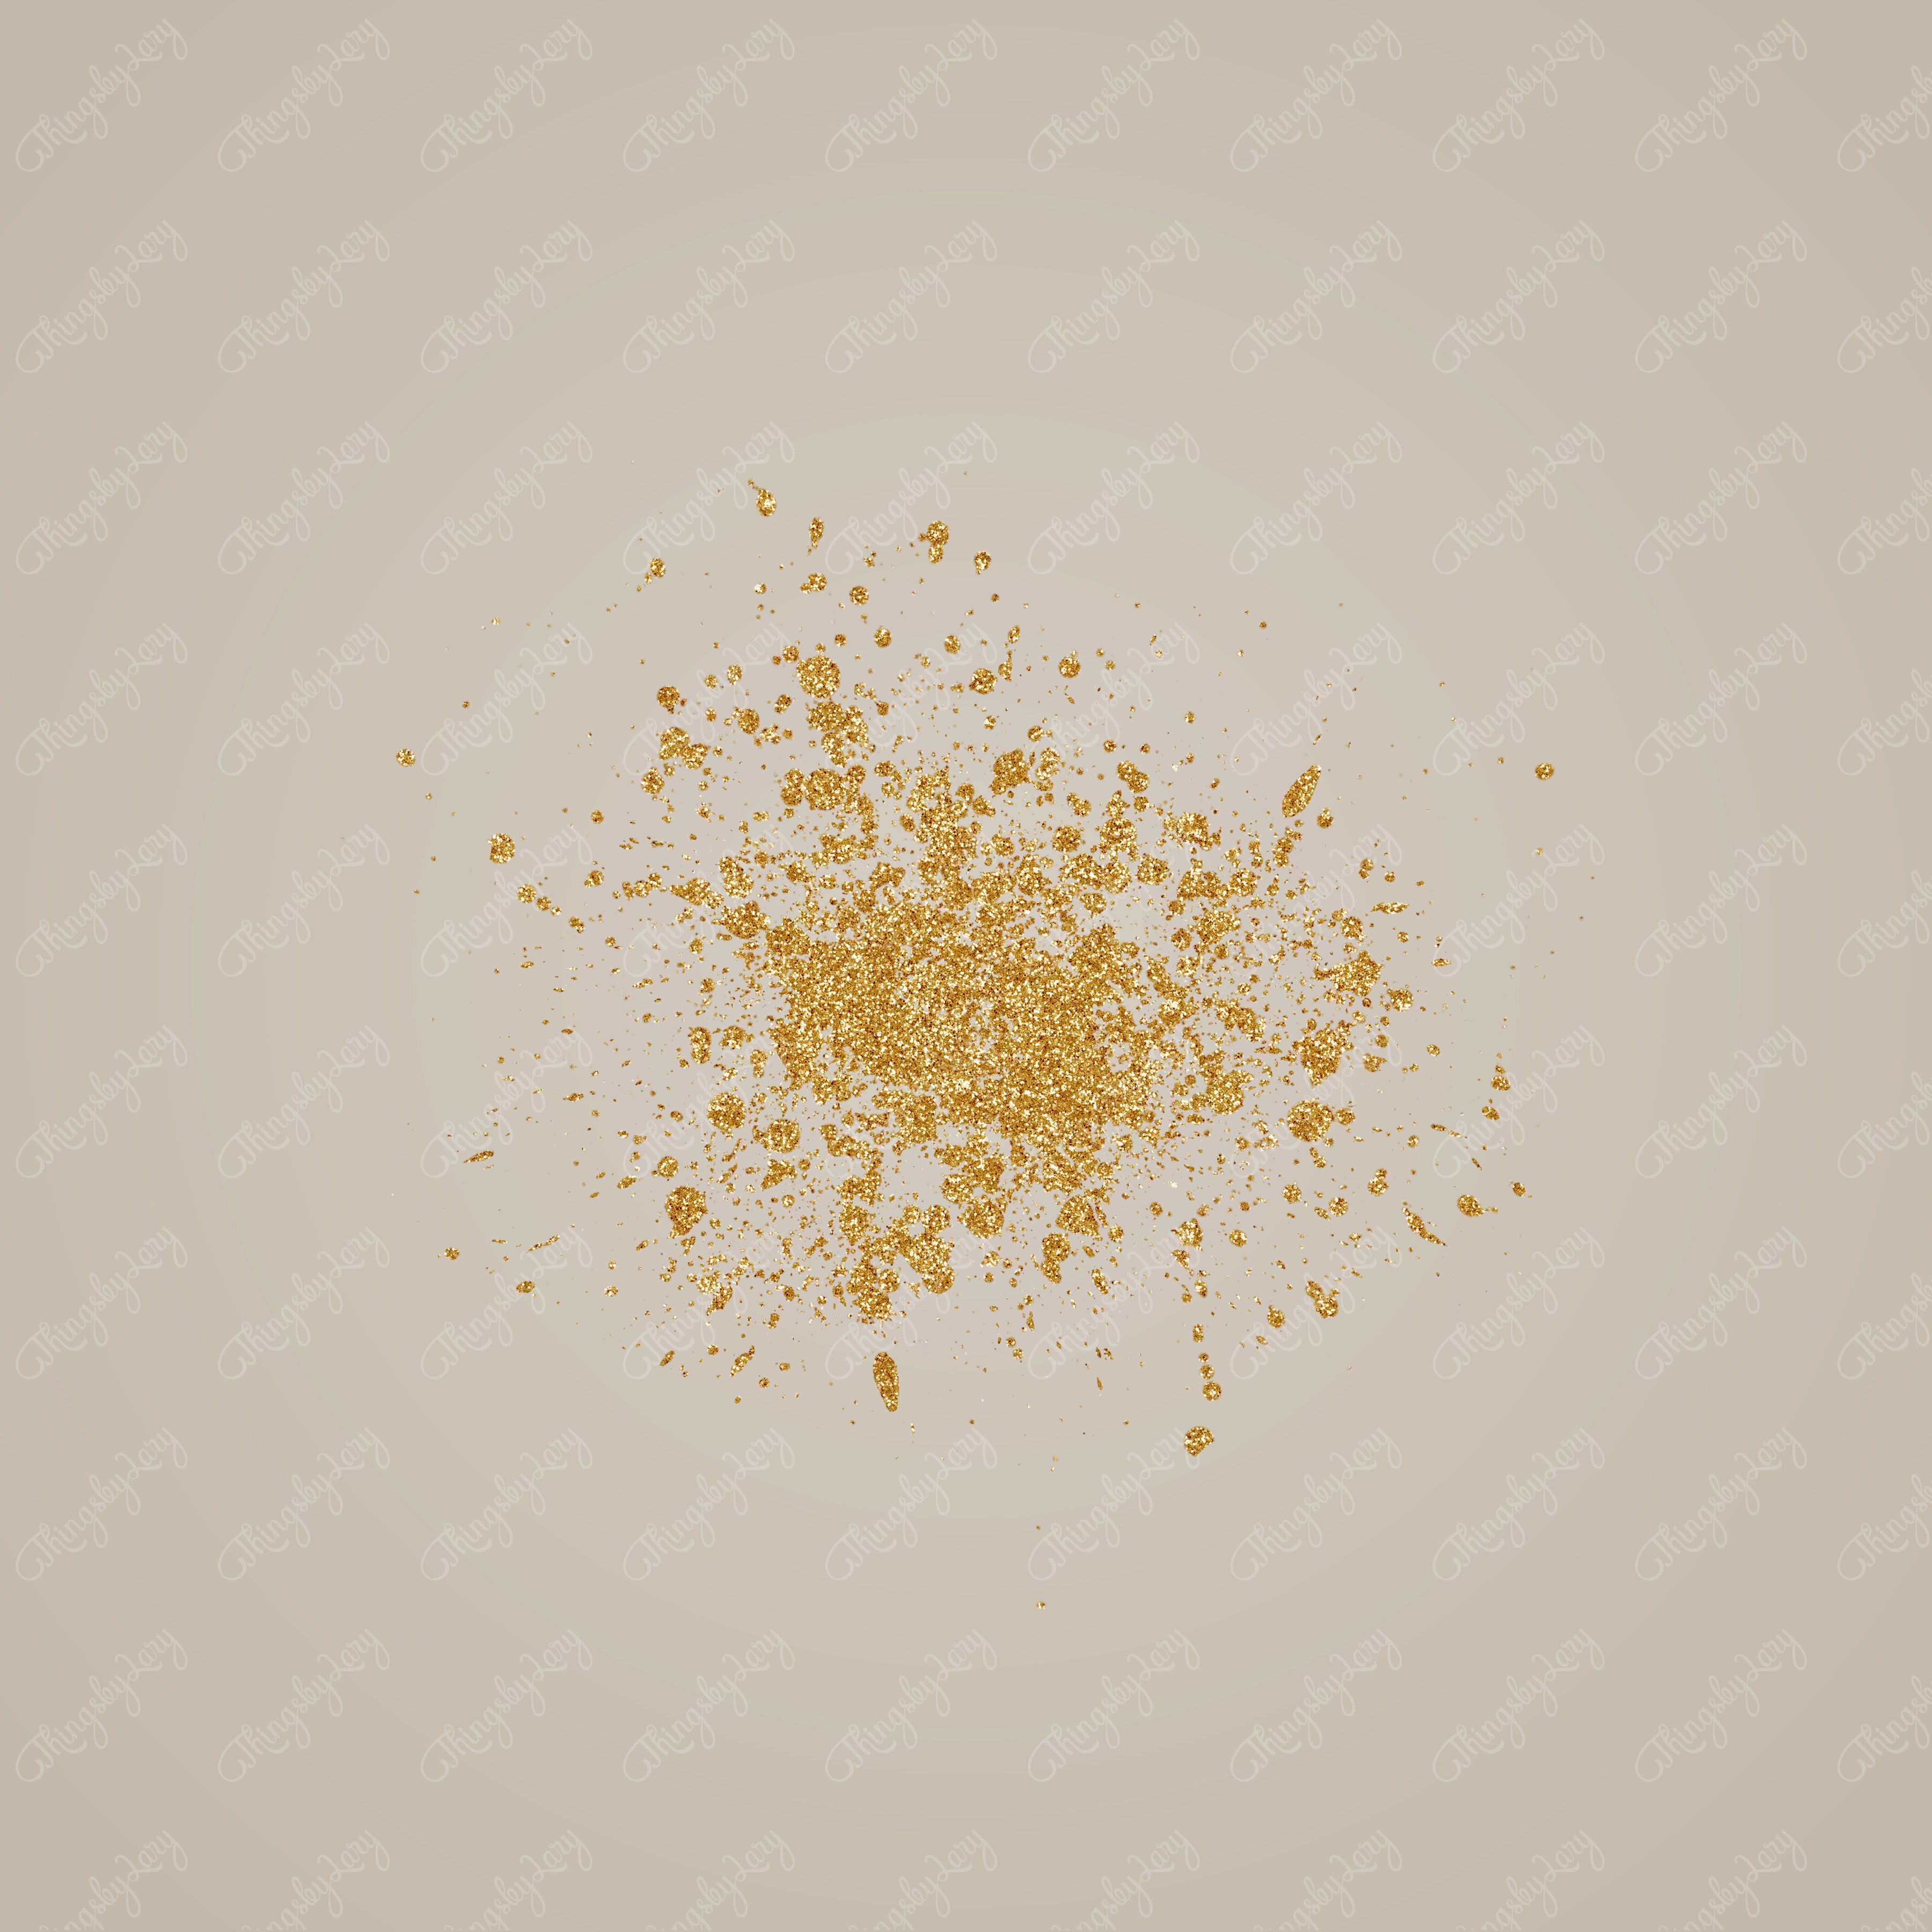 70 Vintage Gold Glitter Particles Set PNG Overlay Images